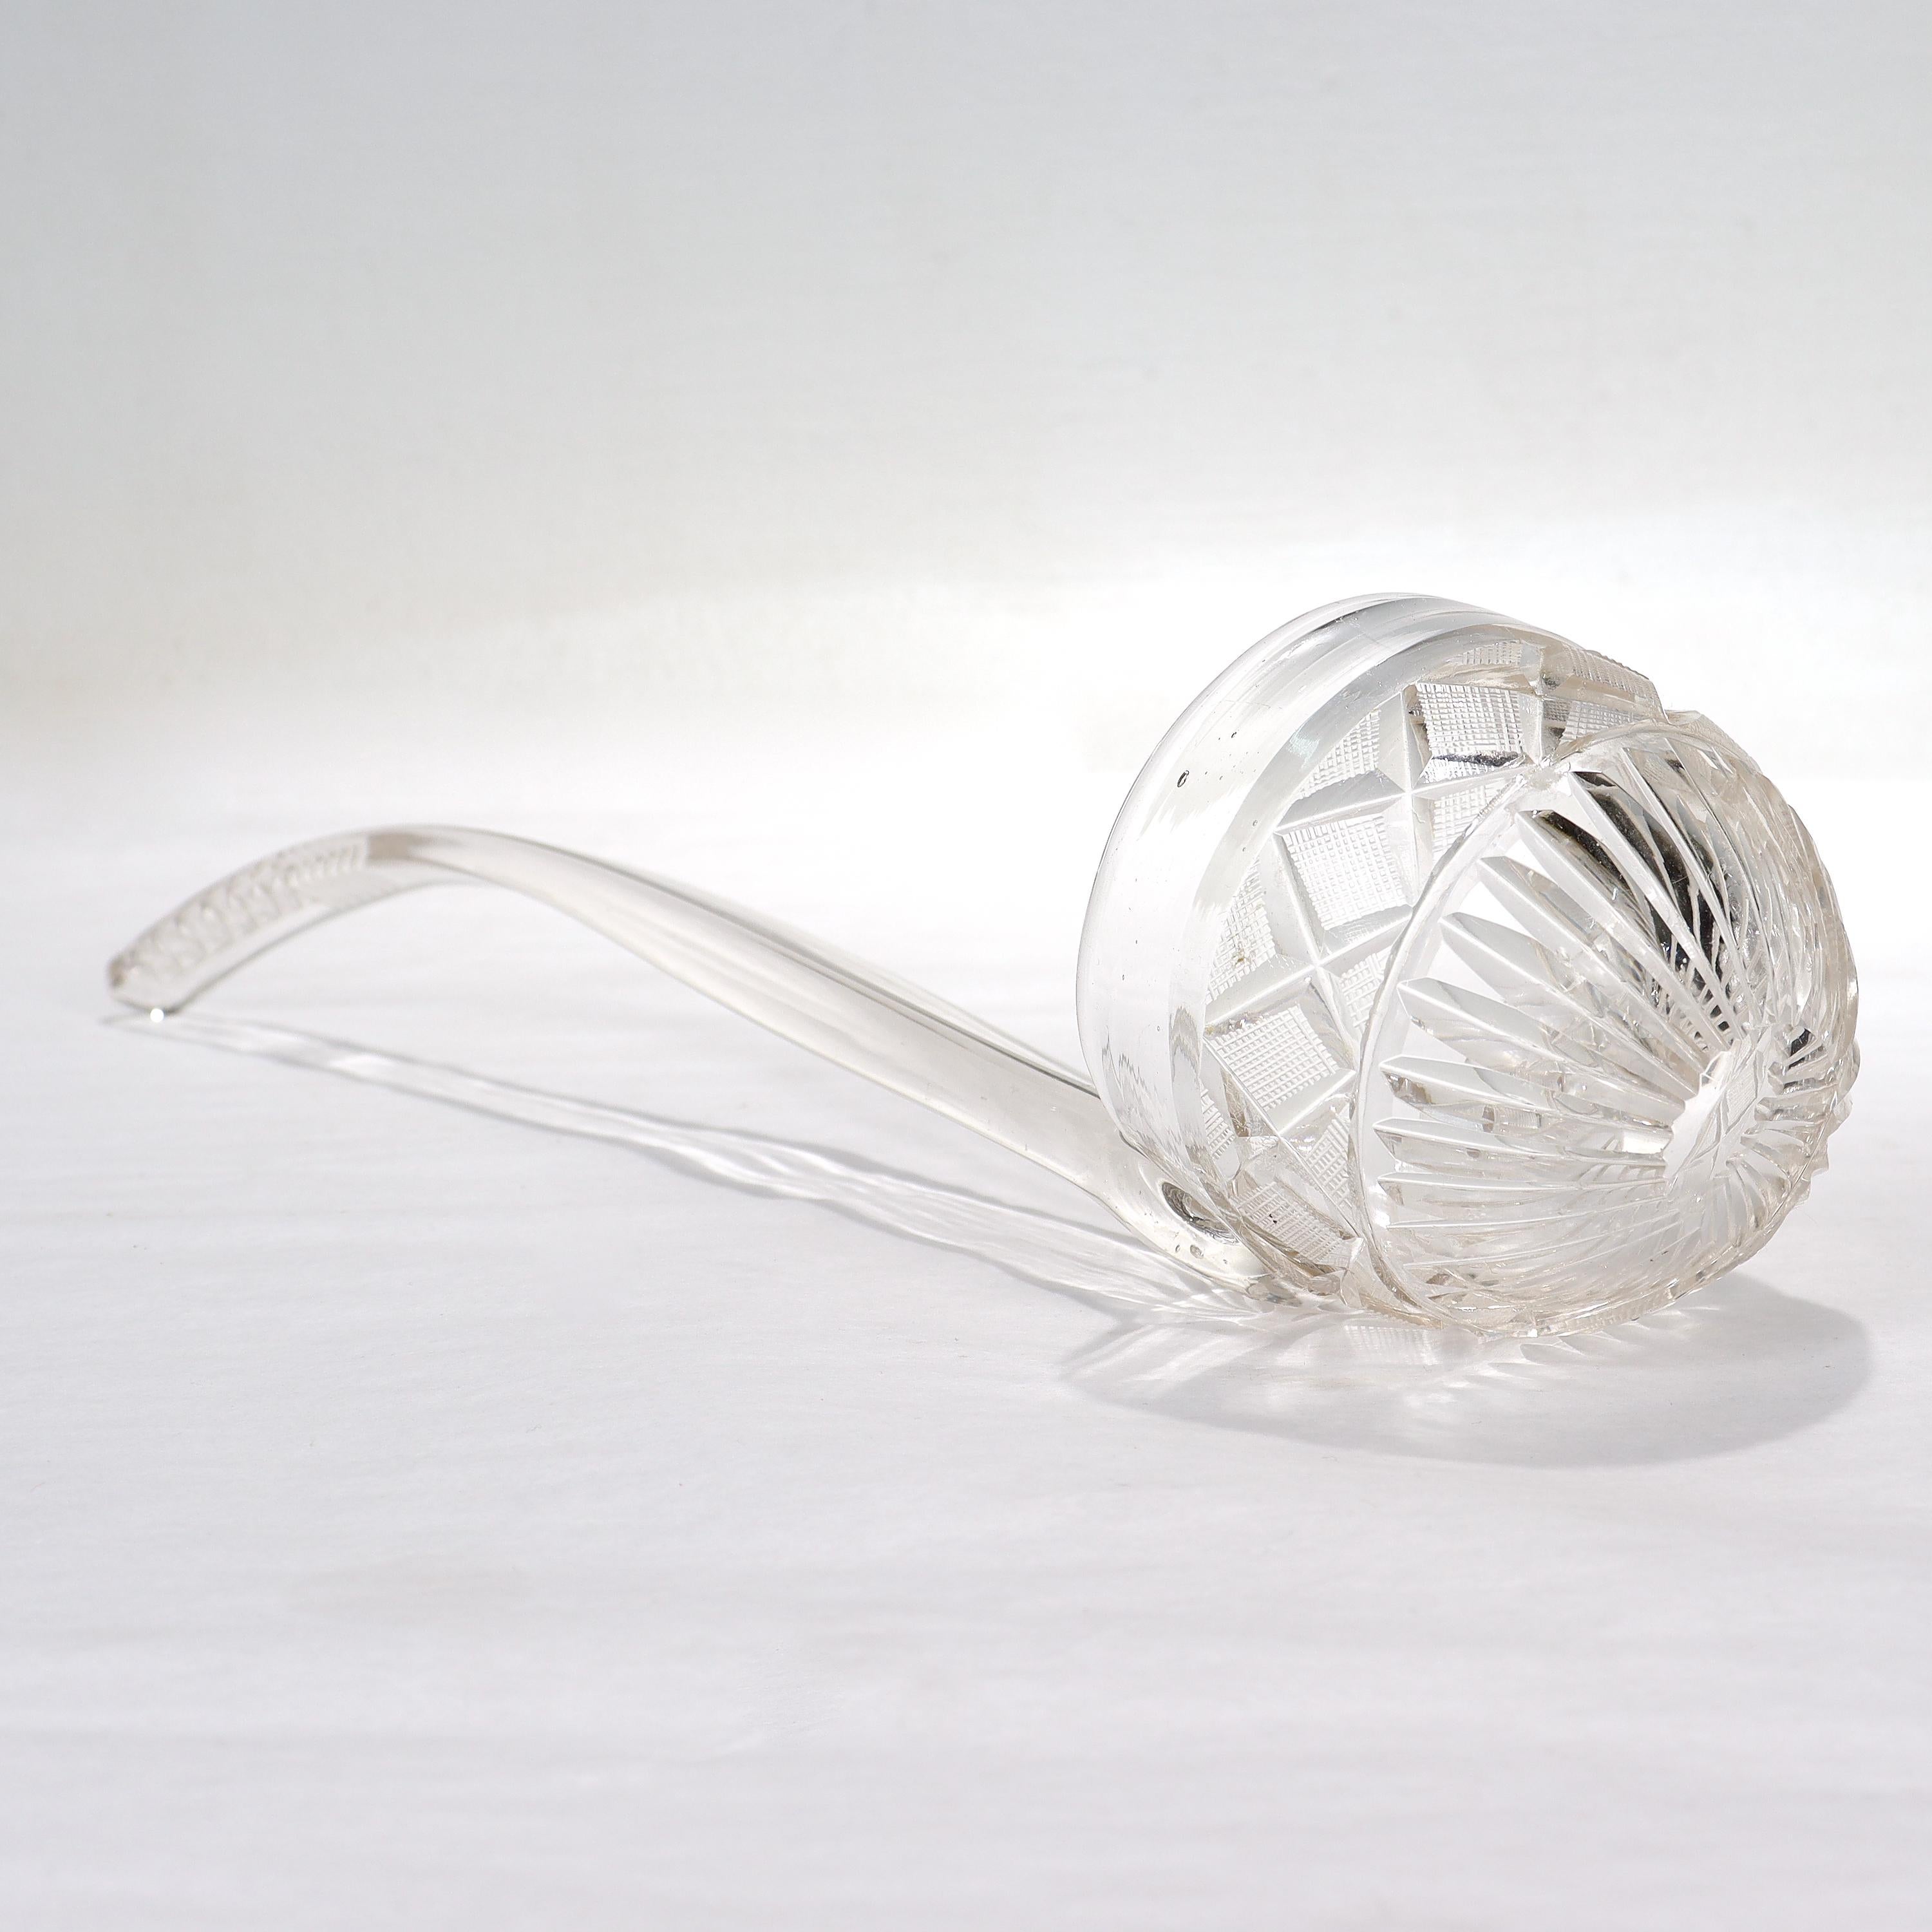 Rare Antique 19th Century Cut Glass Punch Ladle For Sale 1